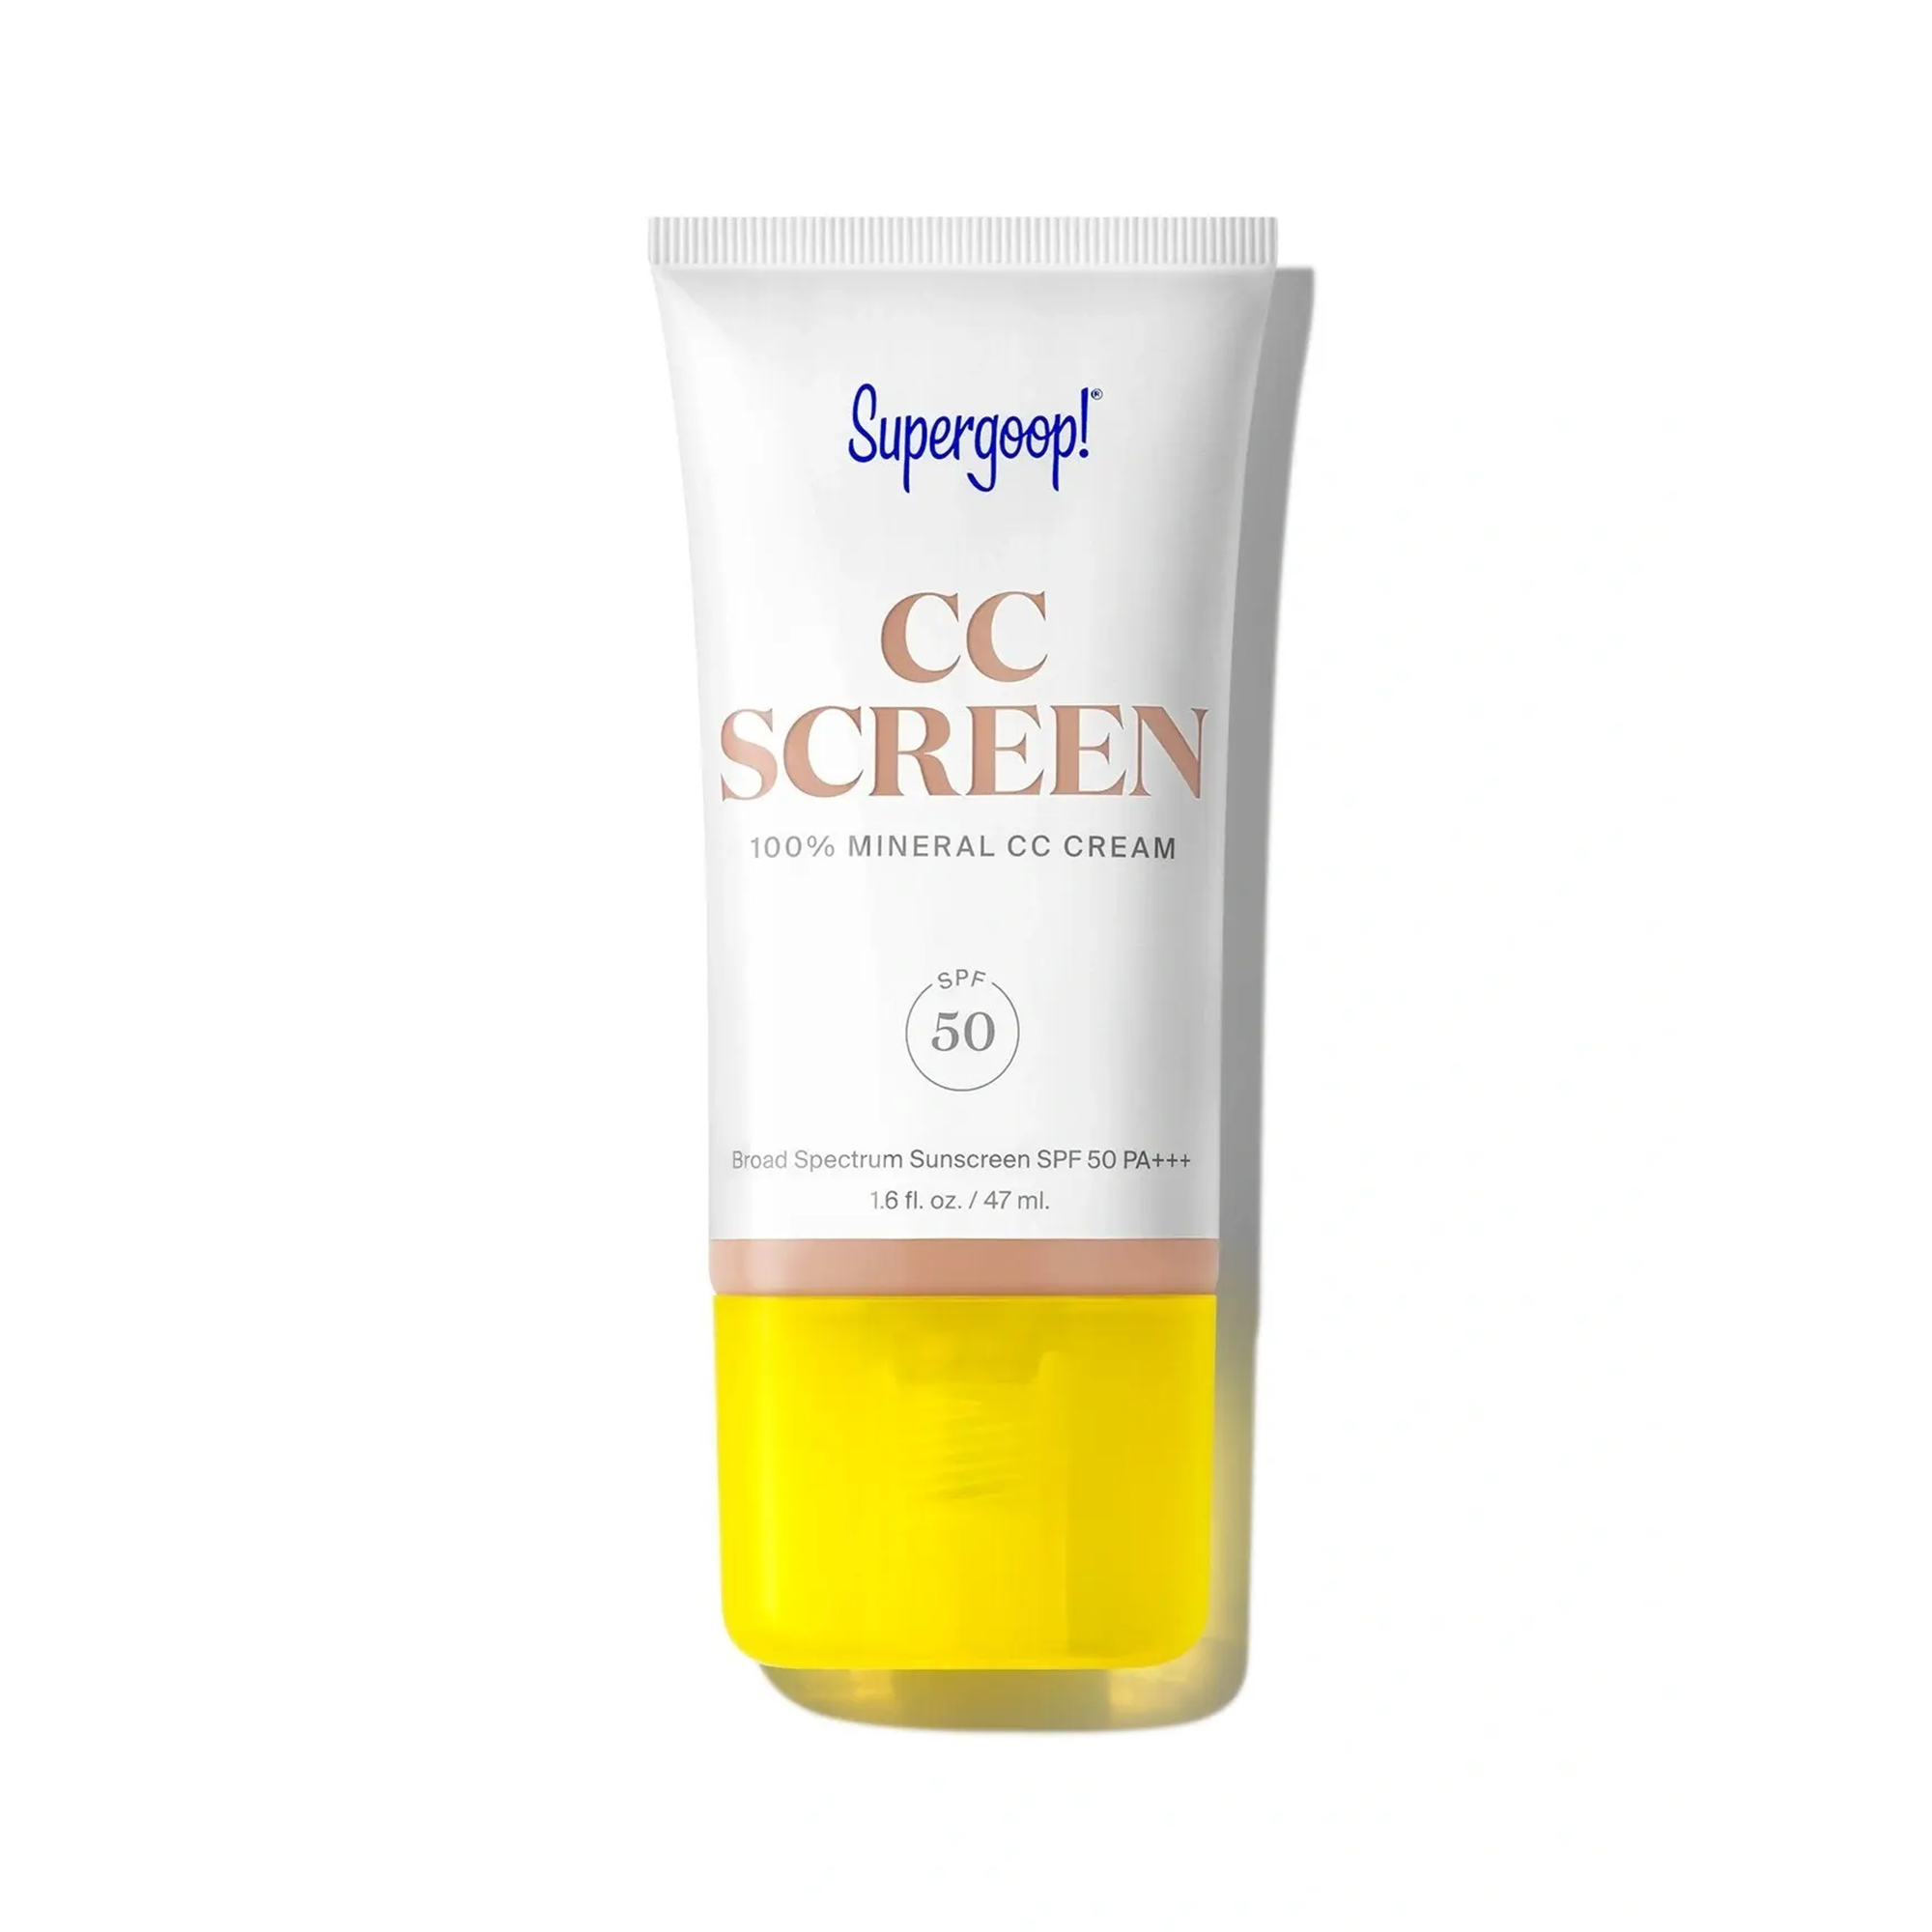 Supergoop! CC Screen 100% Mineral CC Cream SPF 50 / 226W